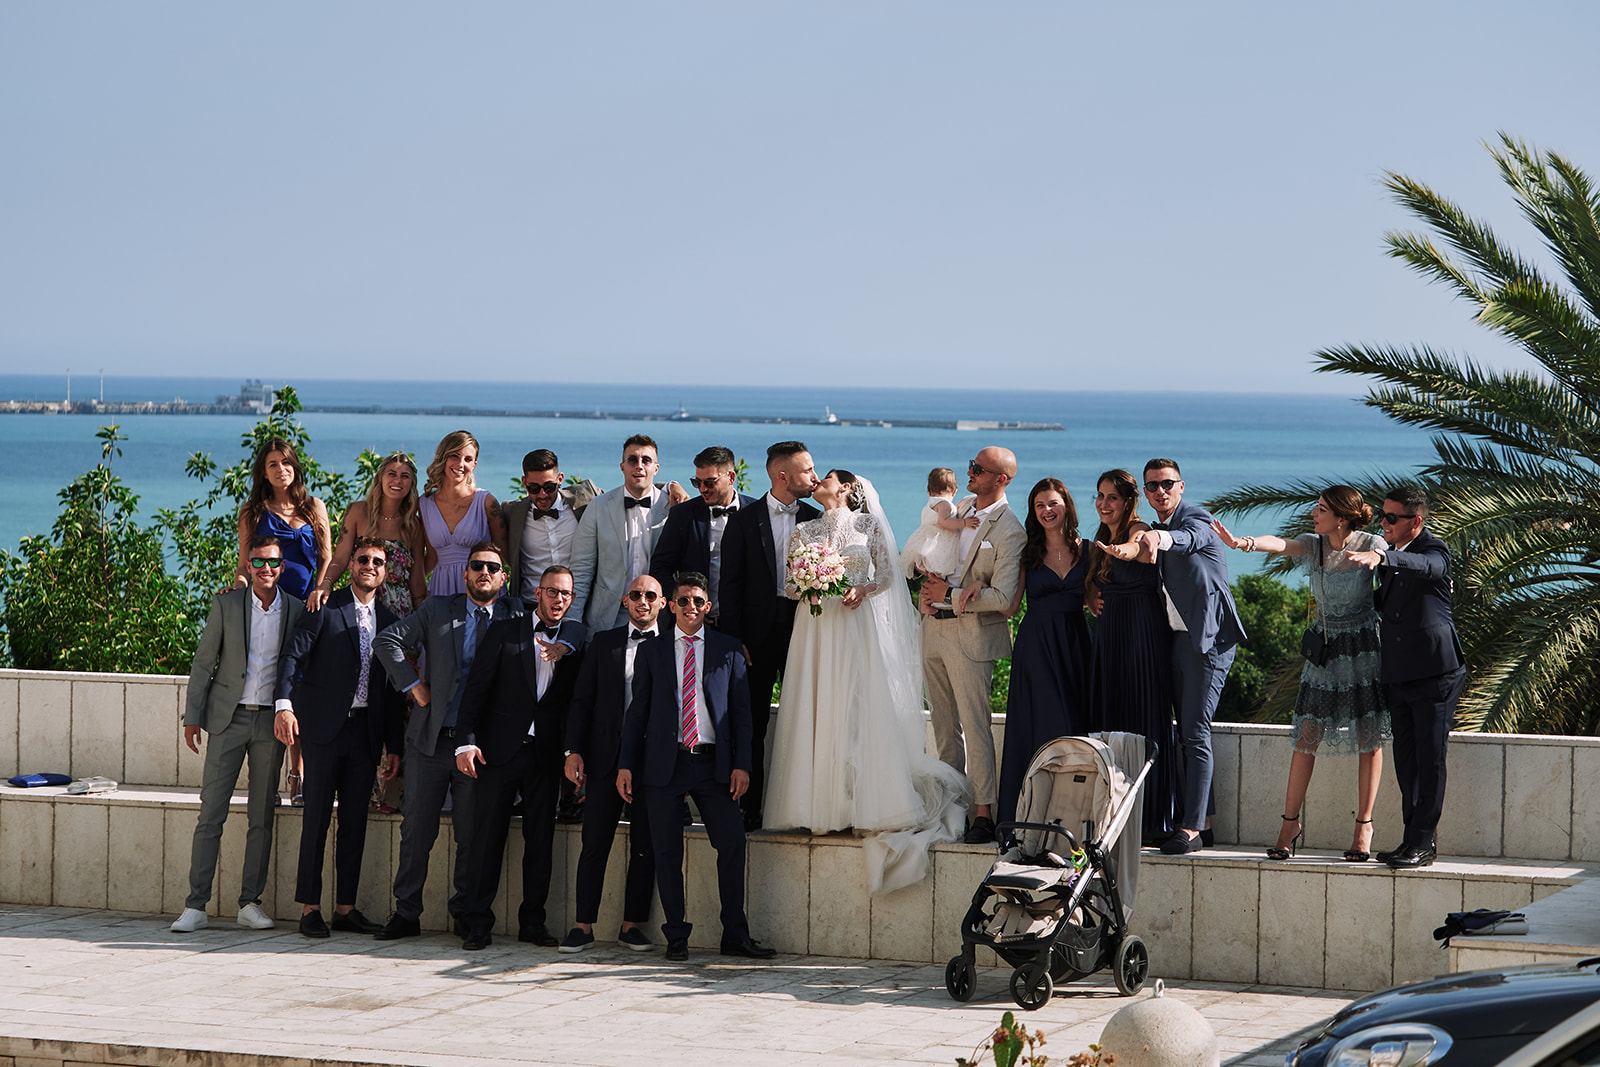 Beautiful wedding photography in Sicily by Emiliano Tidona